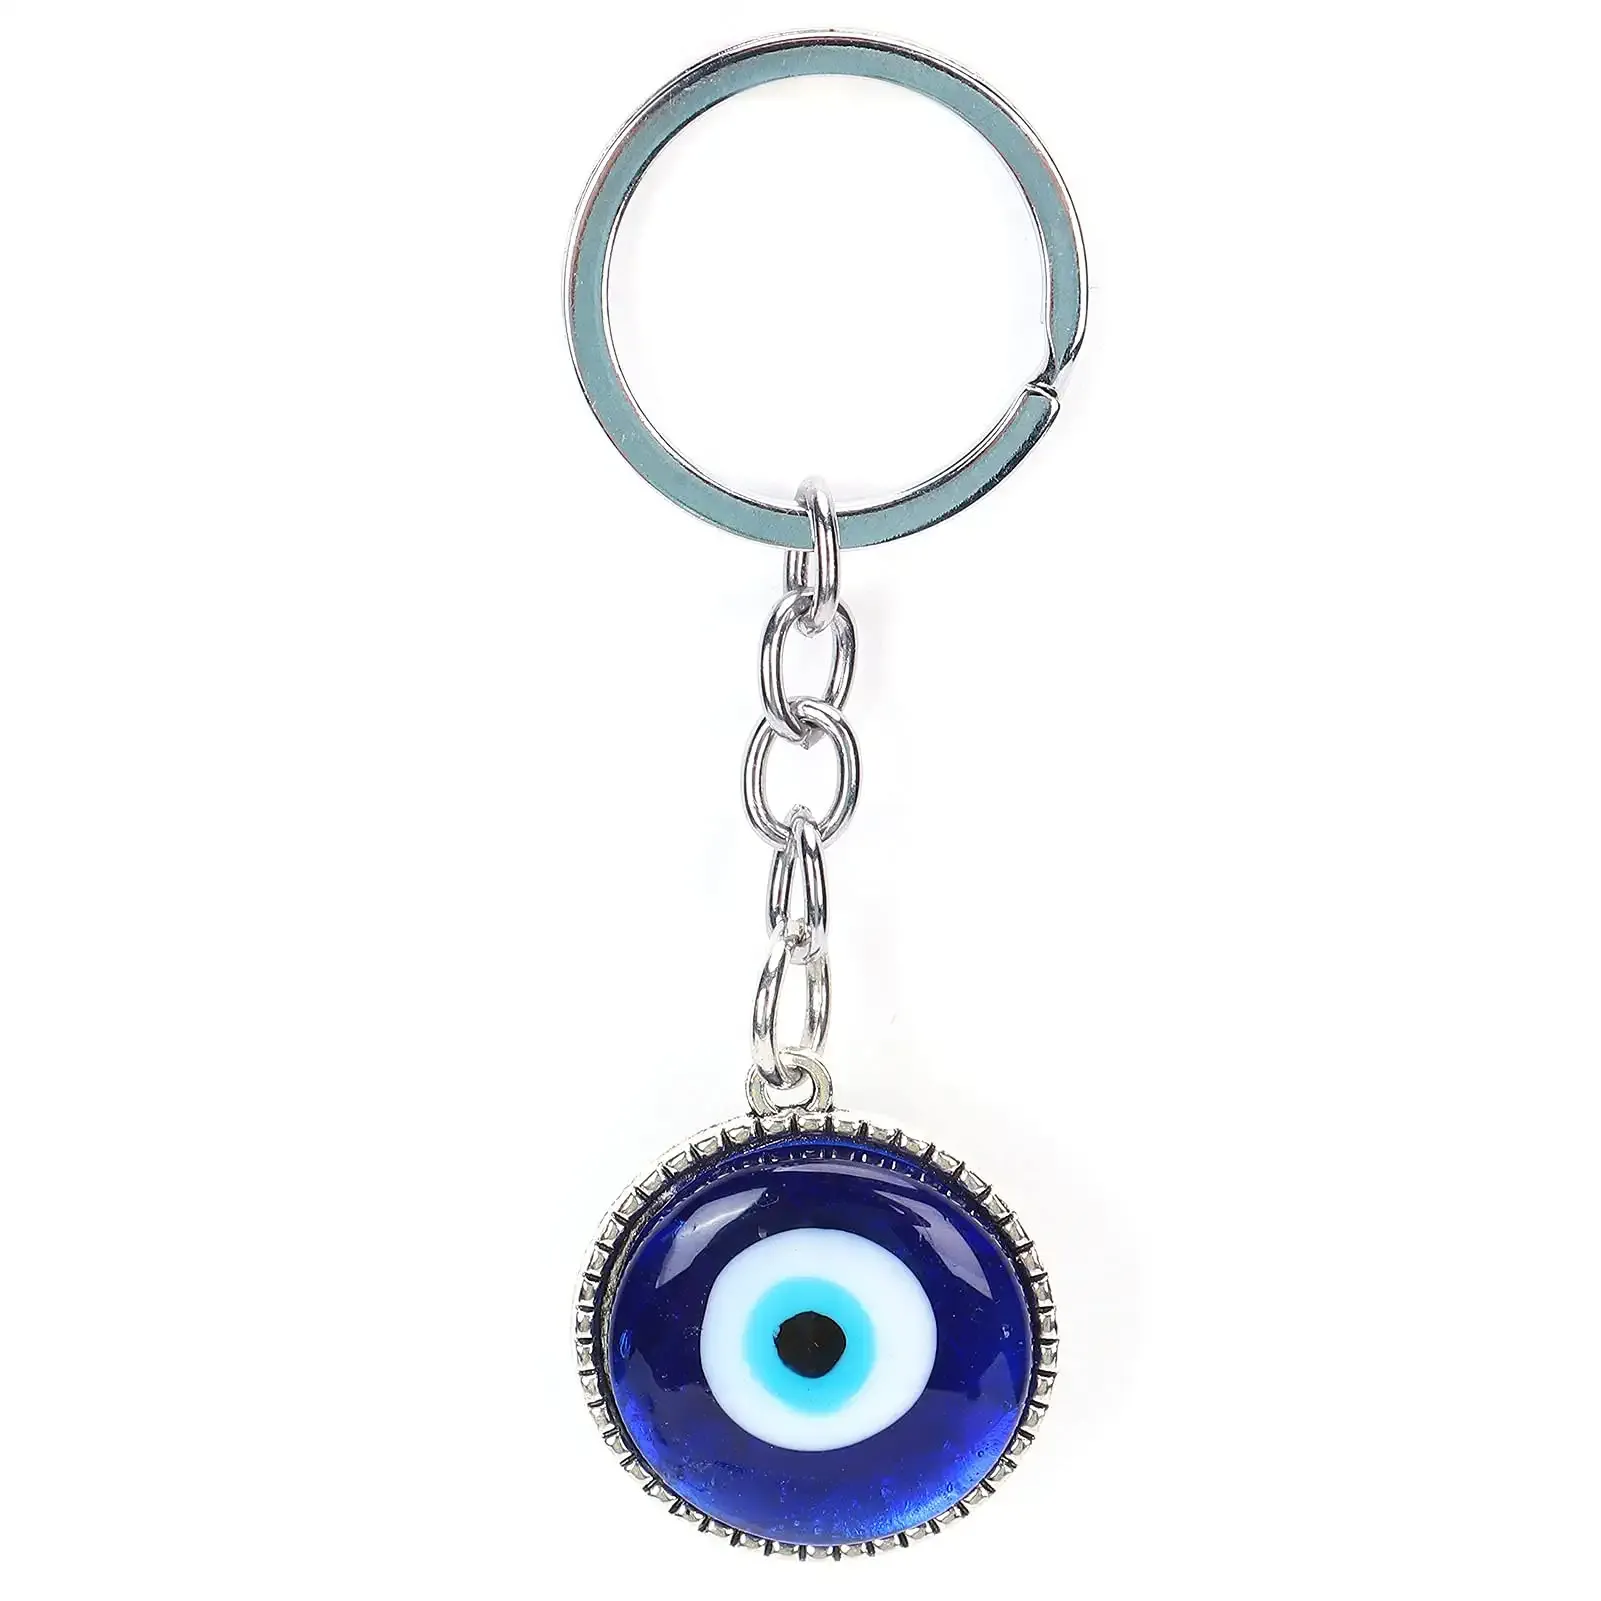 3ml luckey key chain evil eyes key rings blue eyes keychain devils eye key ring for car key pendant purse backpack accessories